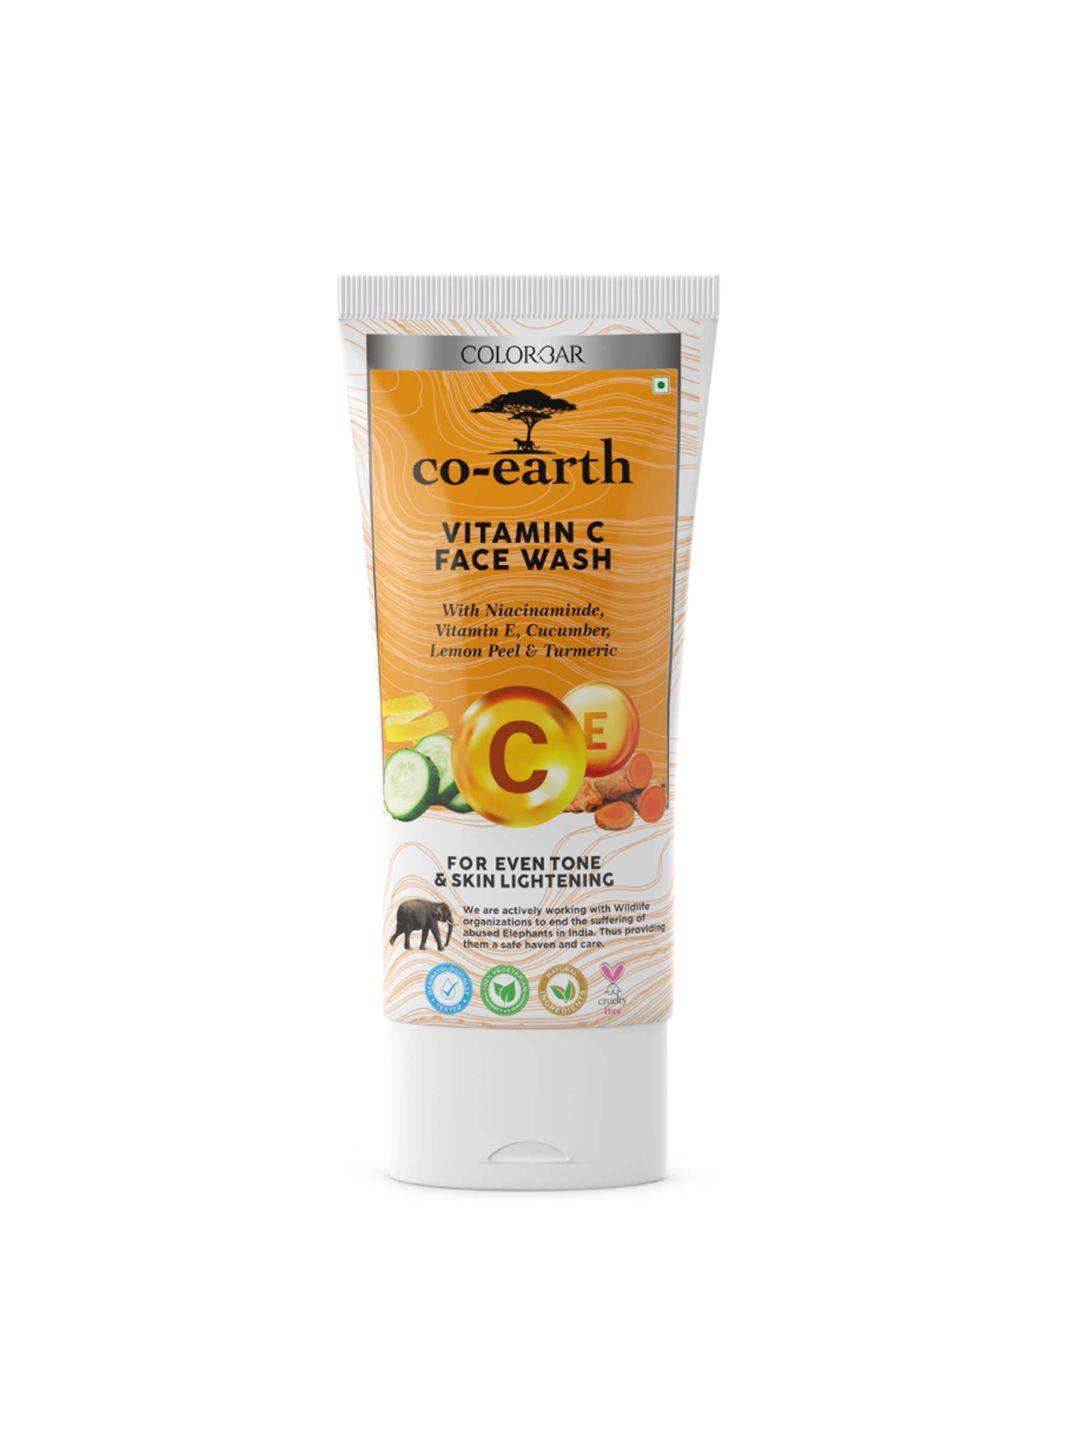 colorbar co-earth vitamin c face wash with niacinamide & vitamin e - 100 g